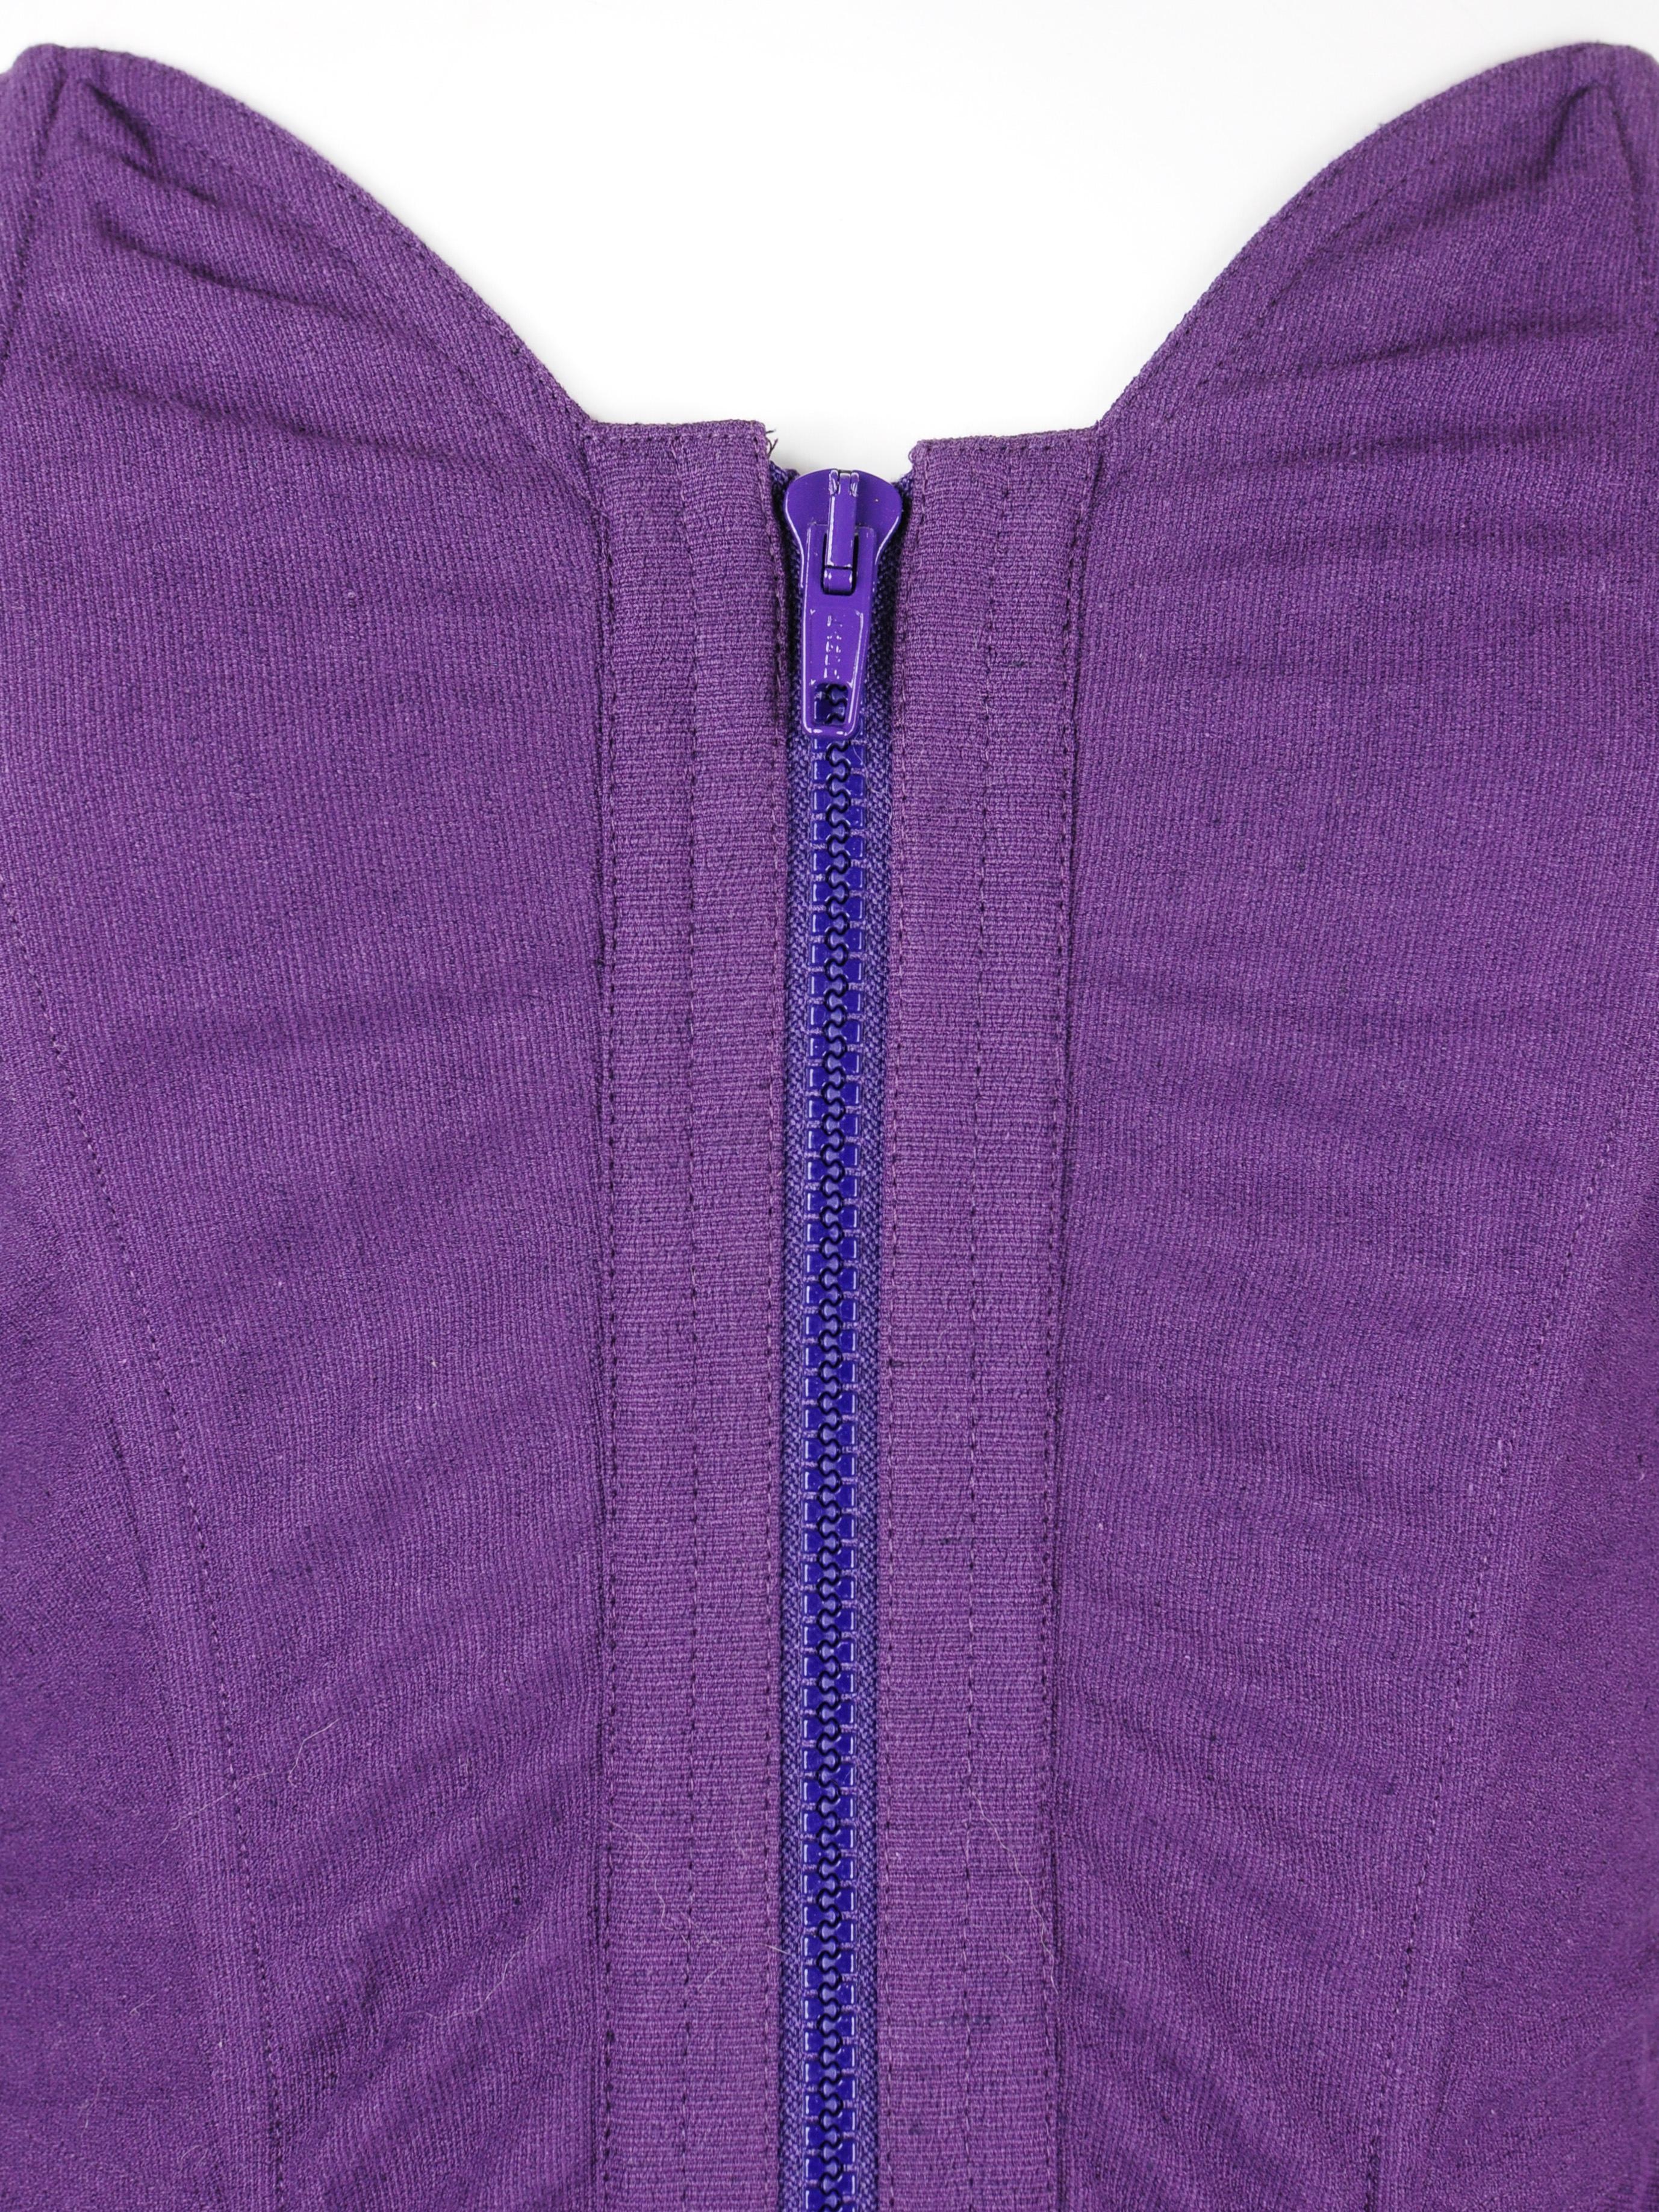 La Perla Corset NWT Deadstock Purple Linen Blend Zipper Peplum Shape 1990s For Sale 1